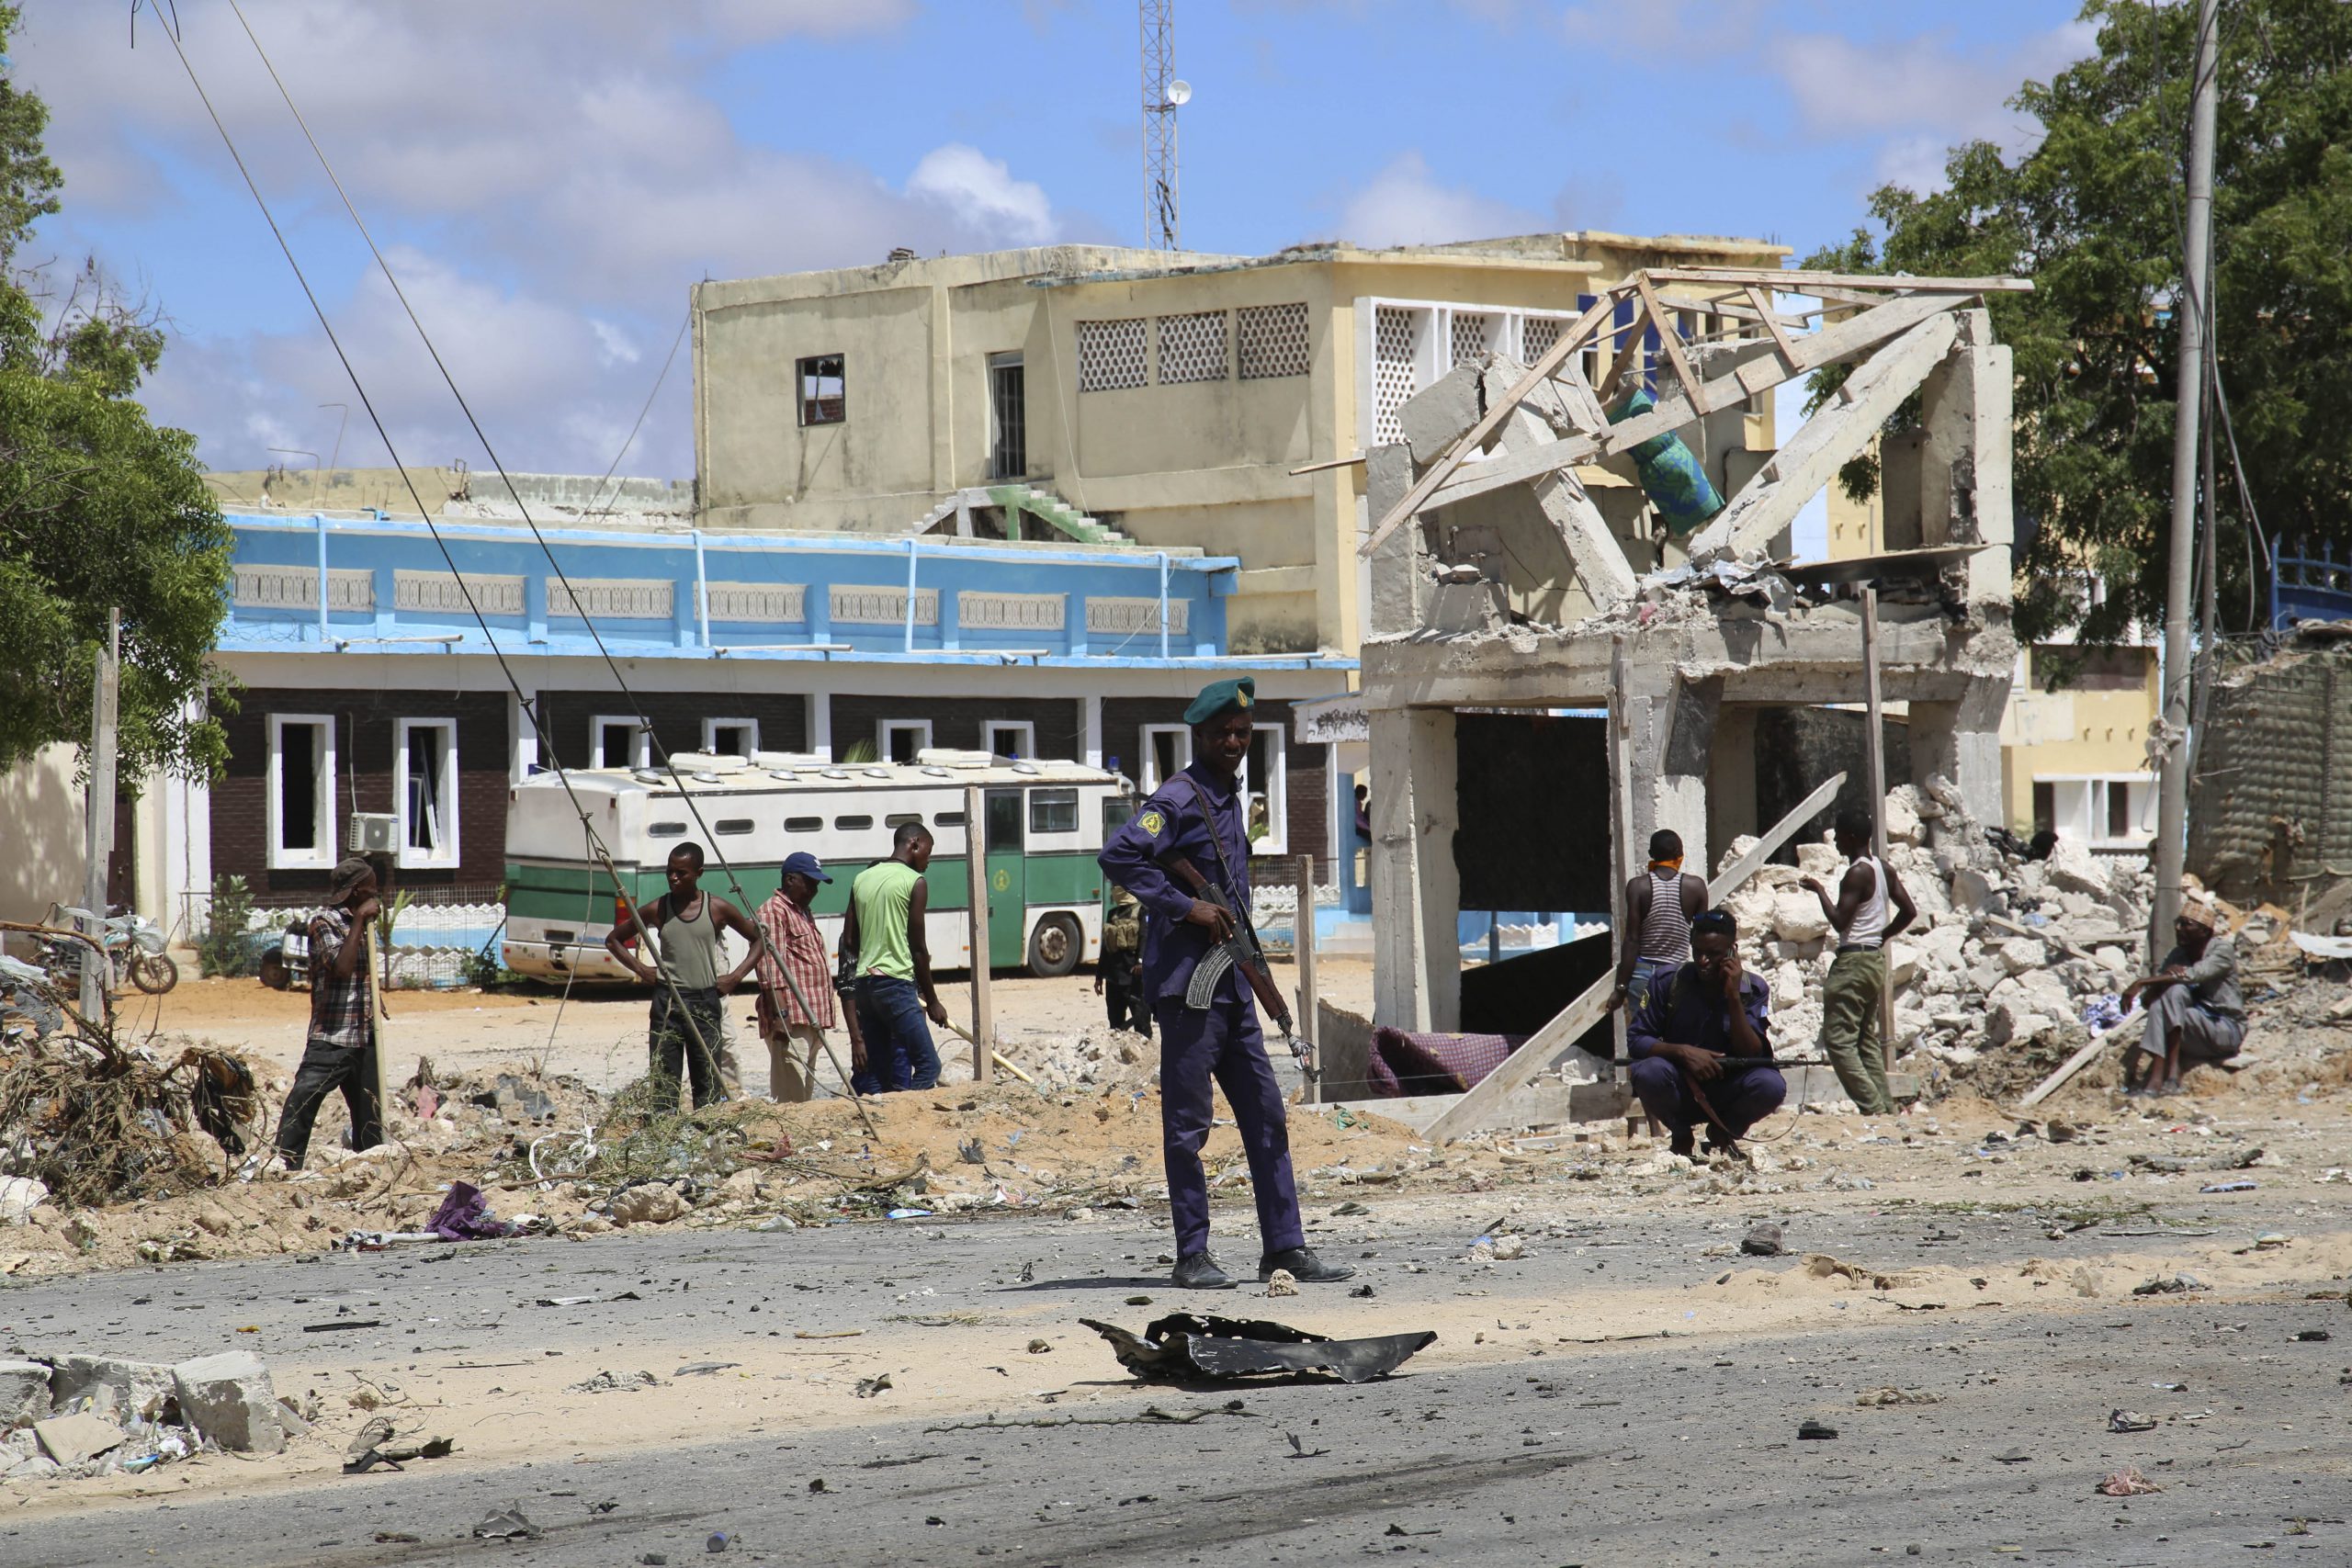 Where is Mogadishu?